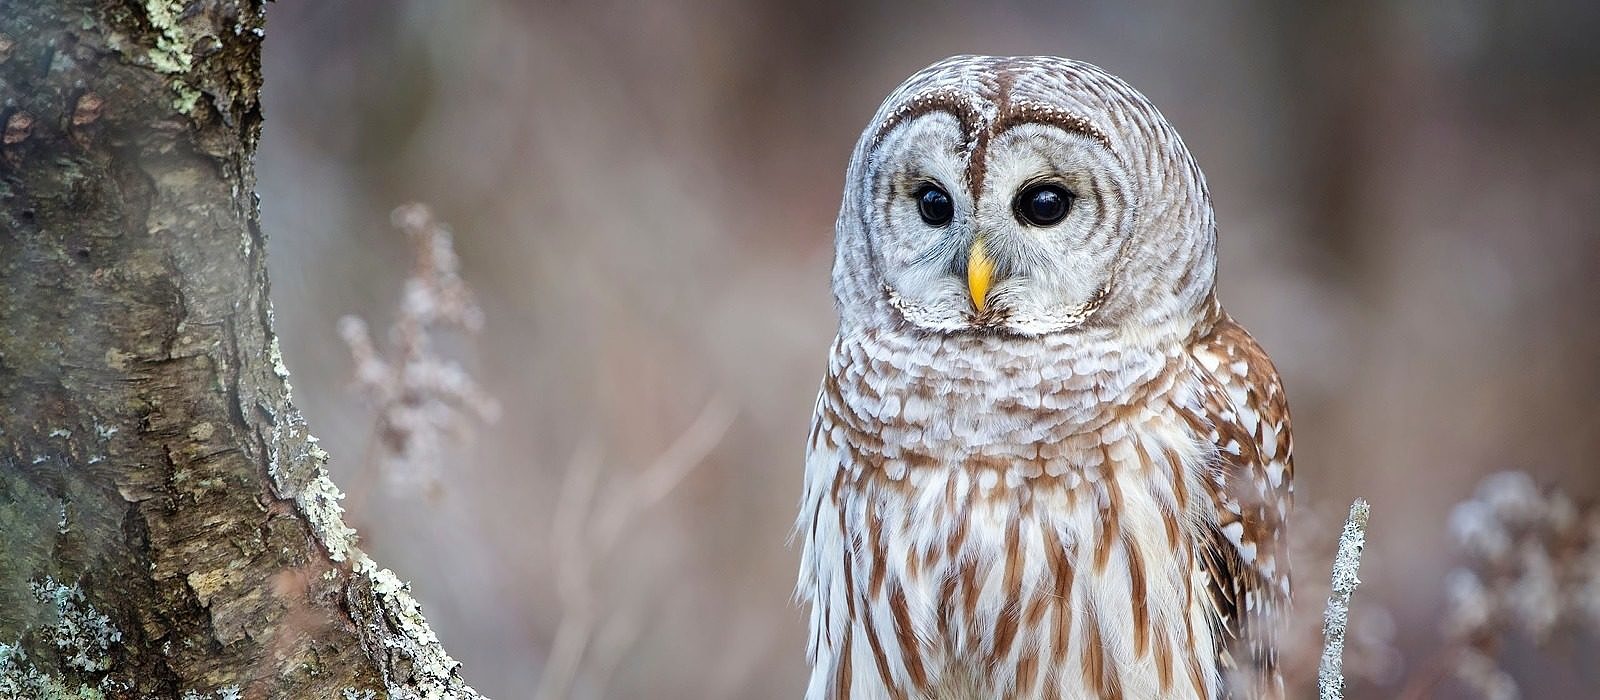 A Barred Owl. (photo © Philip Brown via Unsplash)